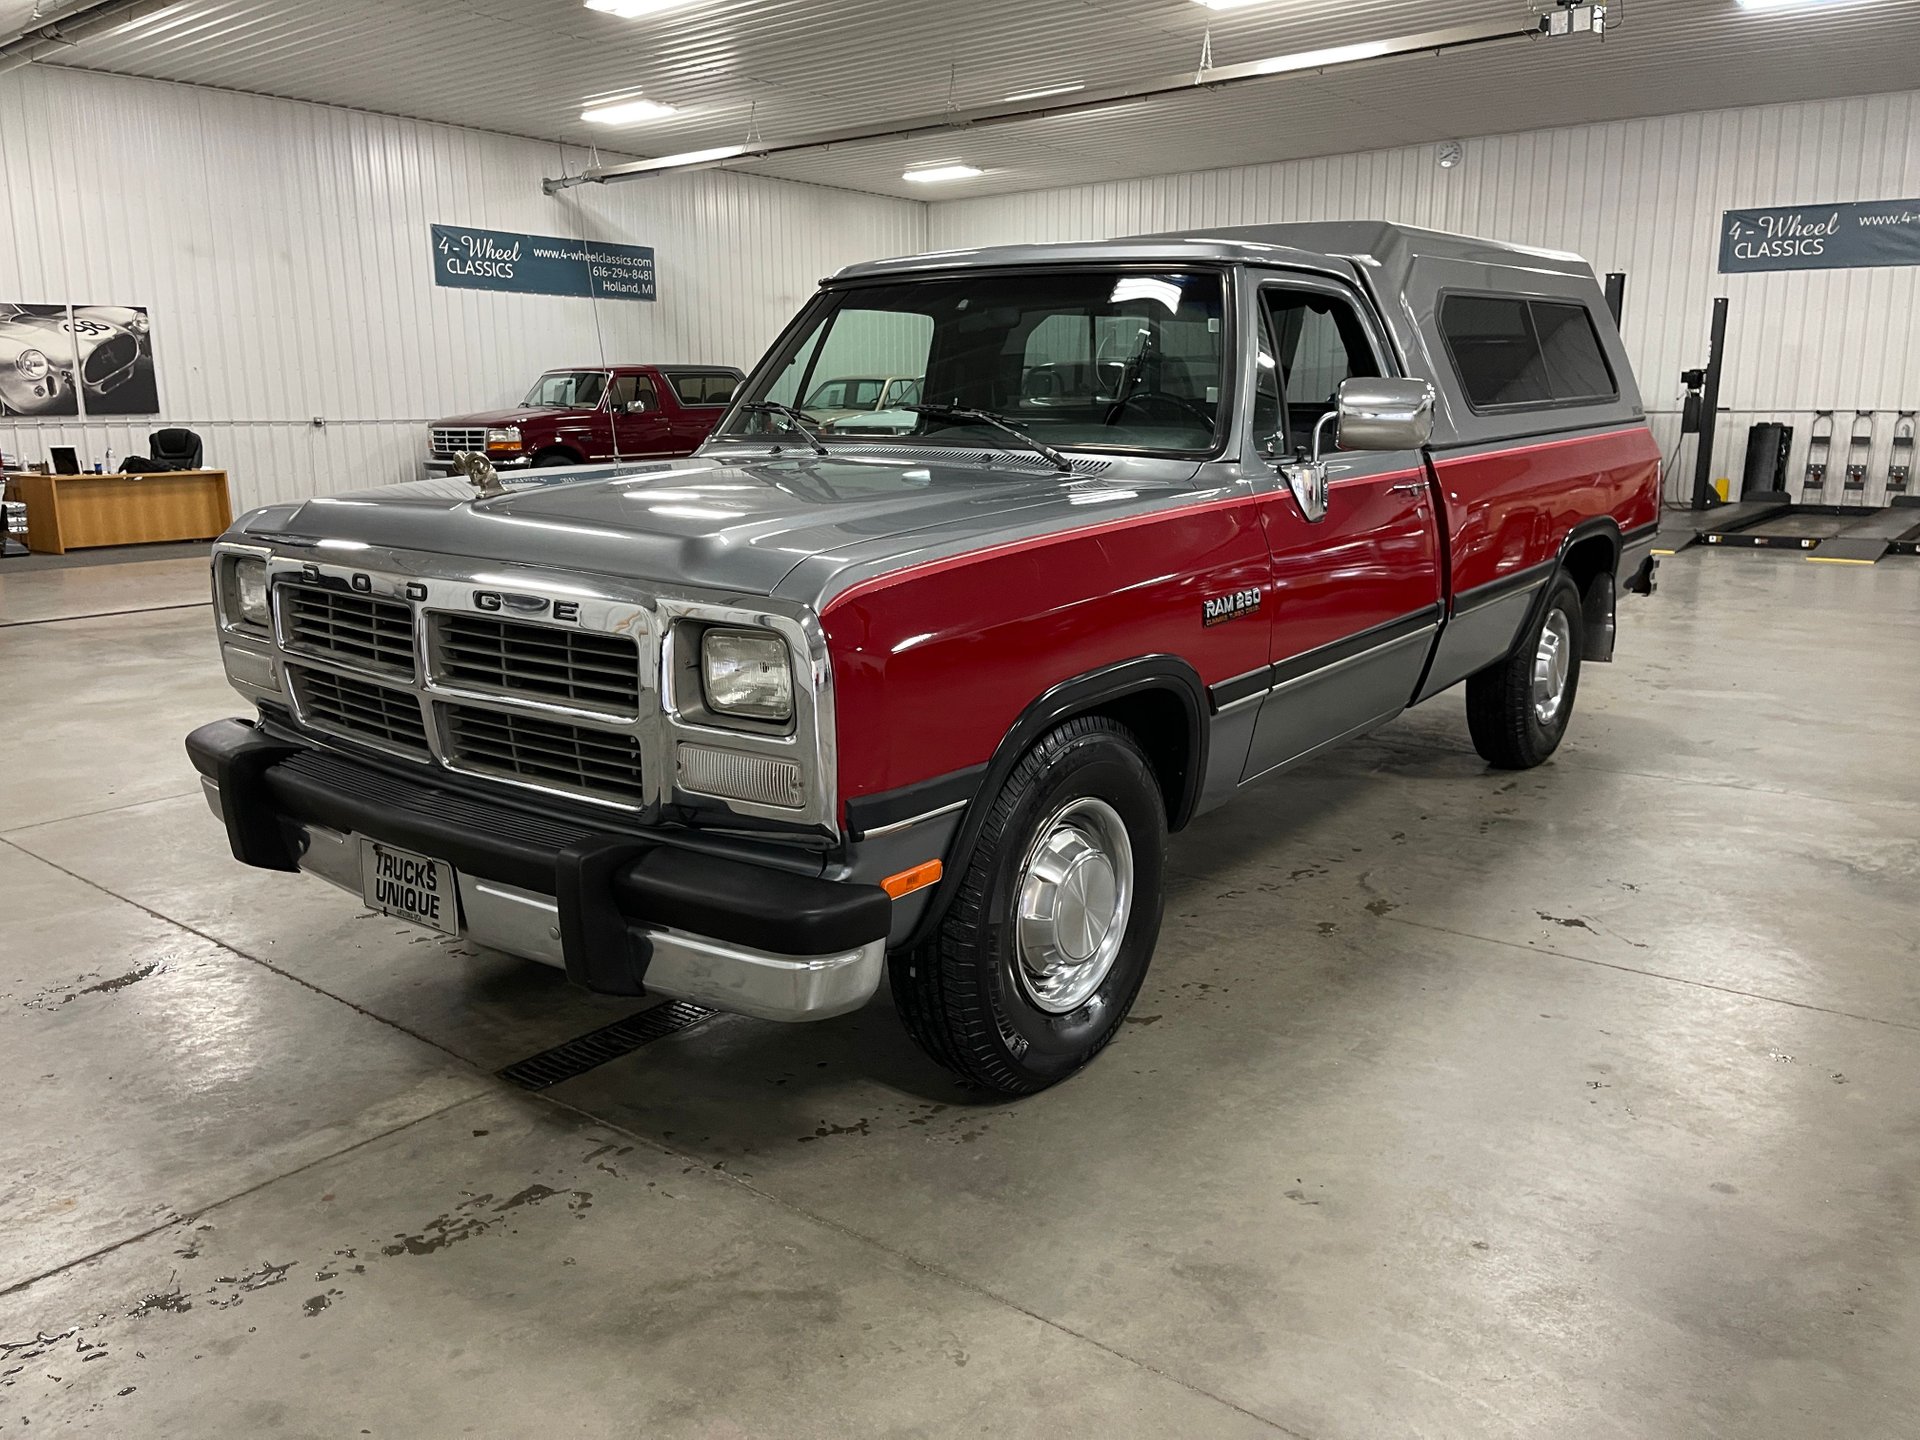 1991 Dodge Ram 250 | 4-Wheel Classics/Classic Car, Truck, and SUV Sales